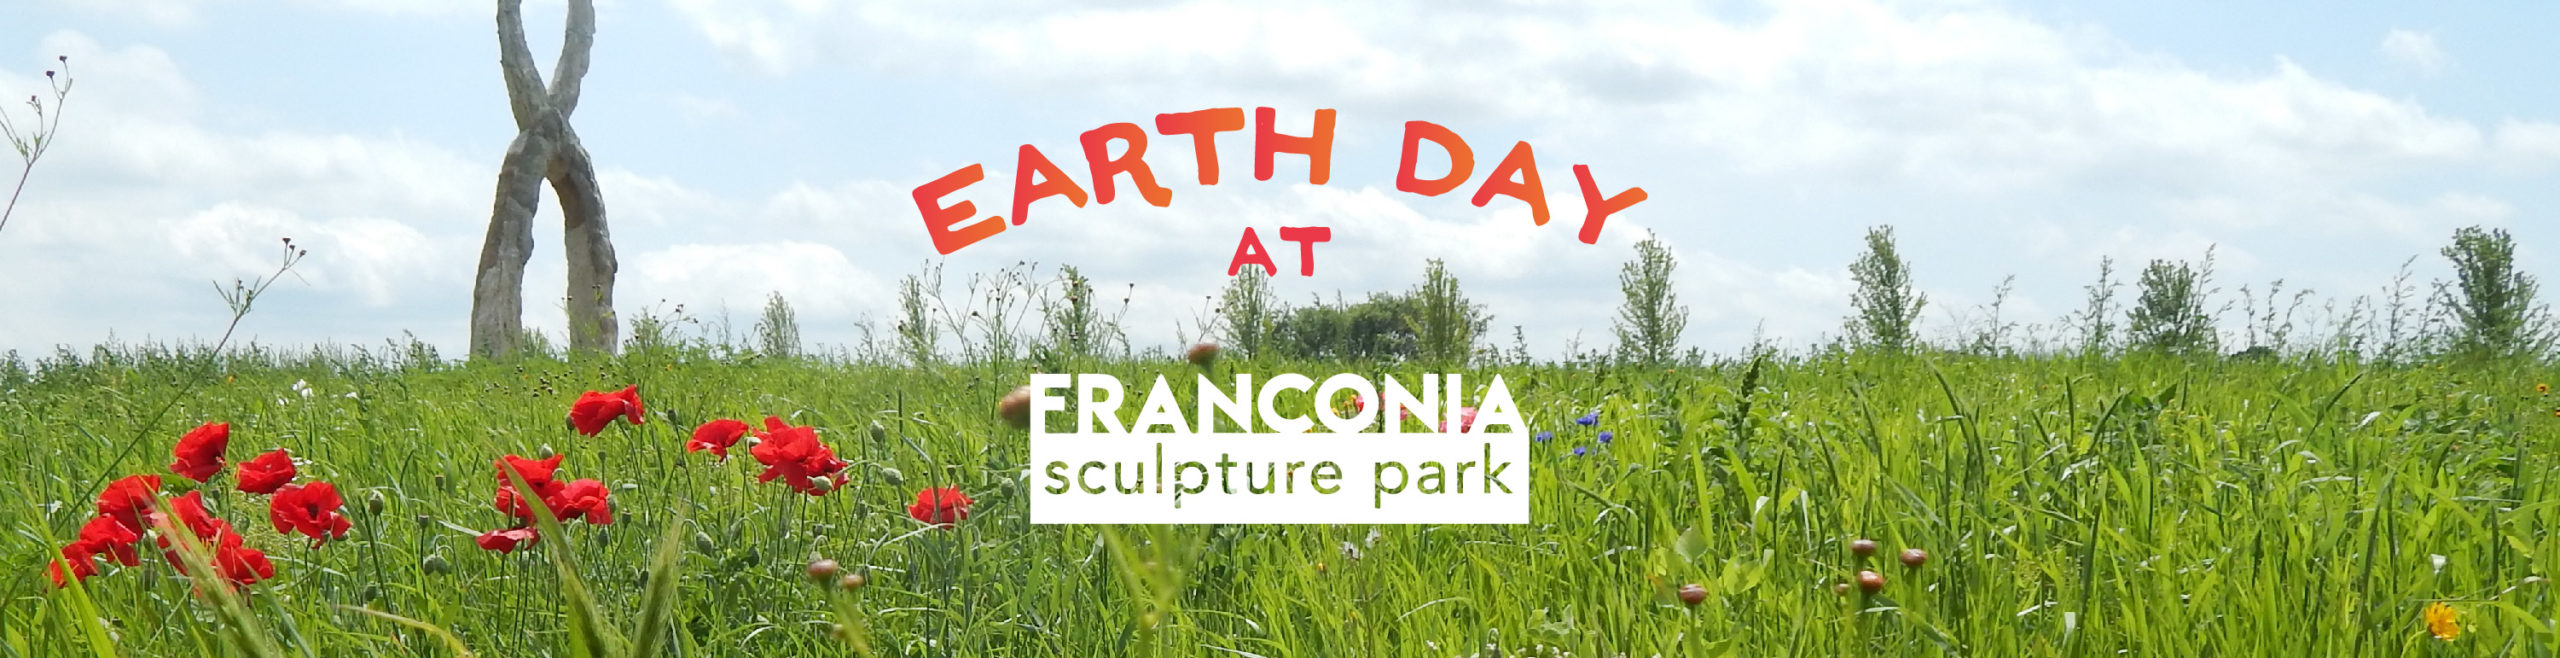 Earth Day at Franconia